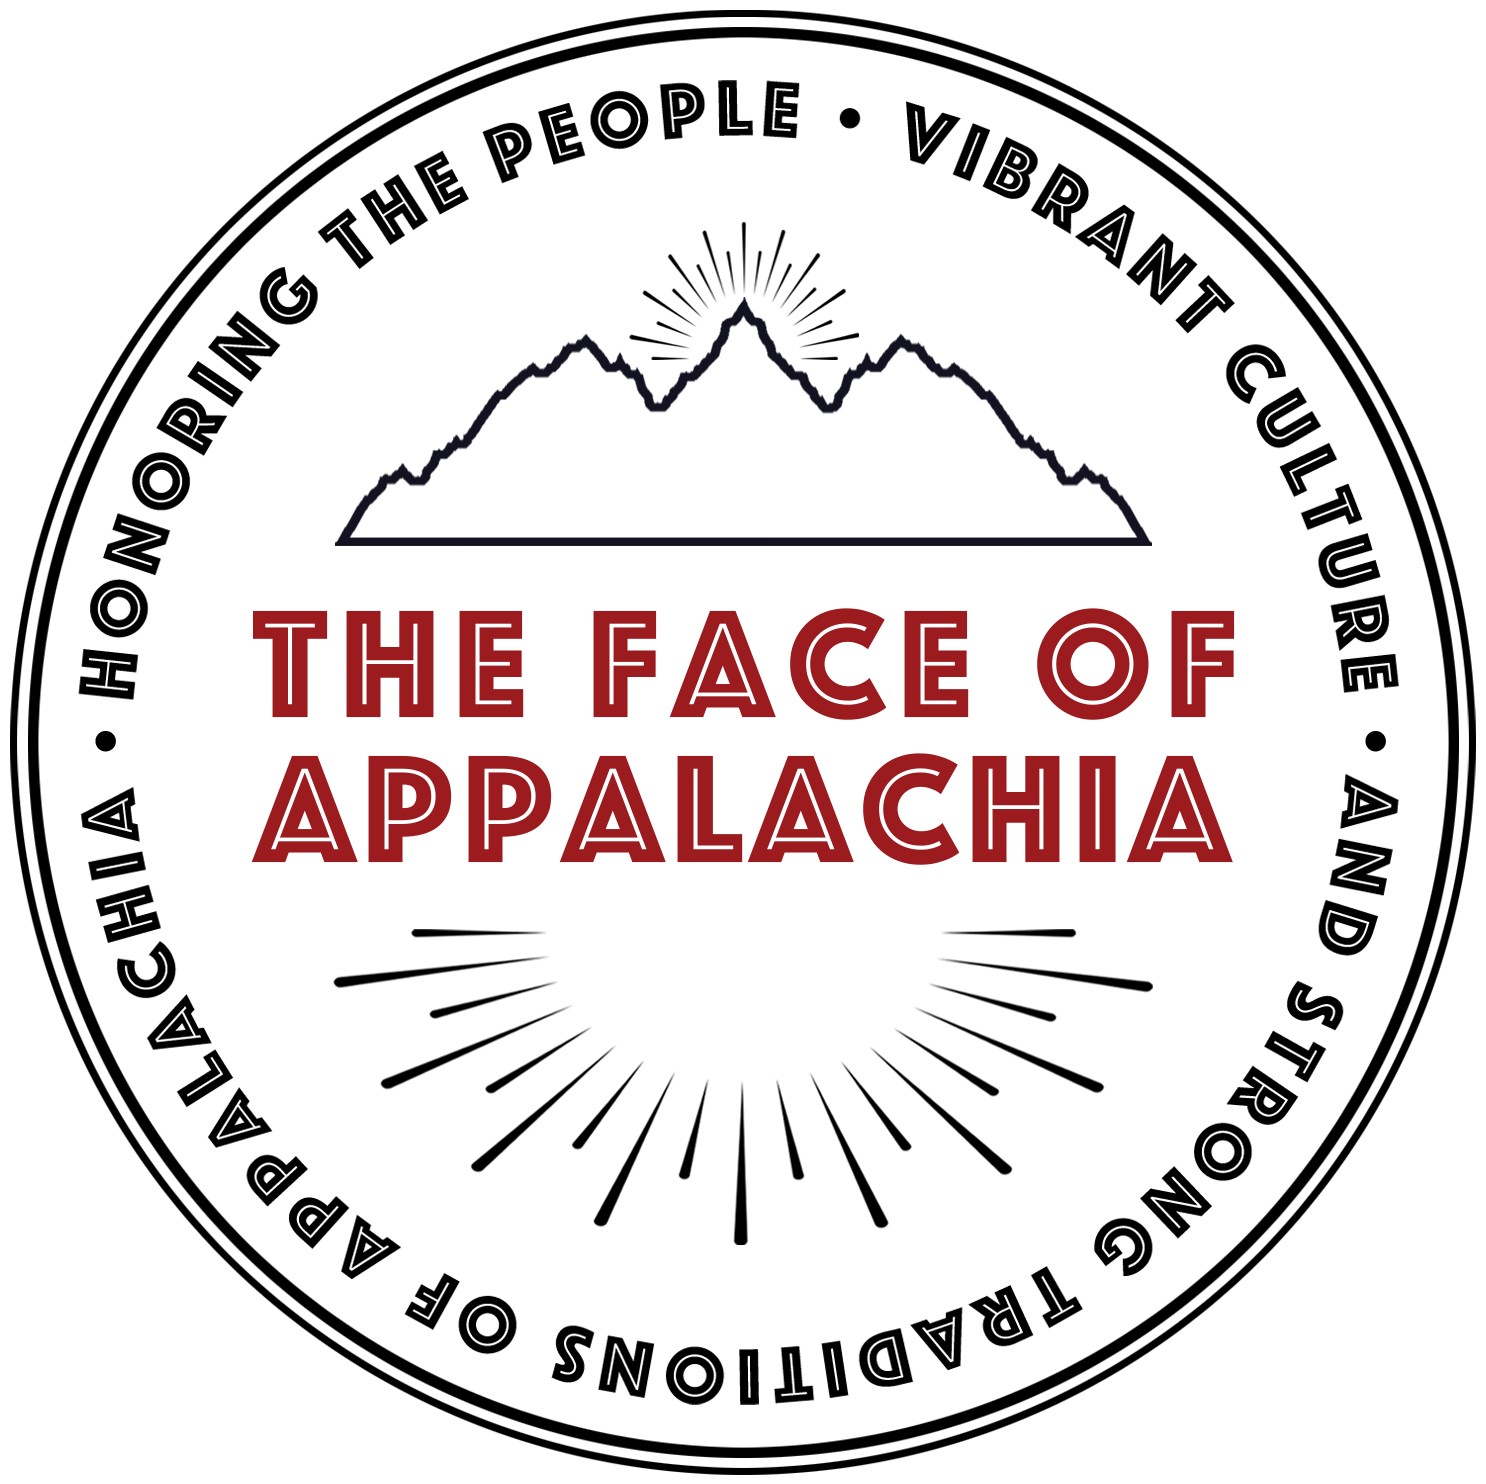 THE FACE OF APPALACHIA